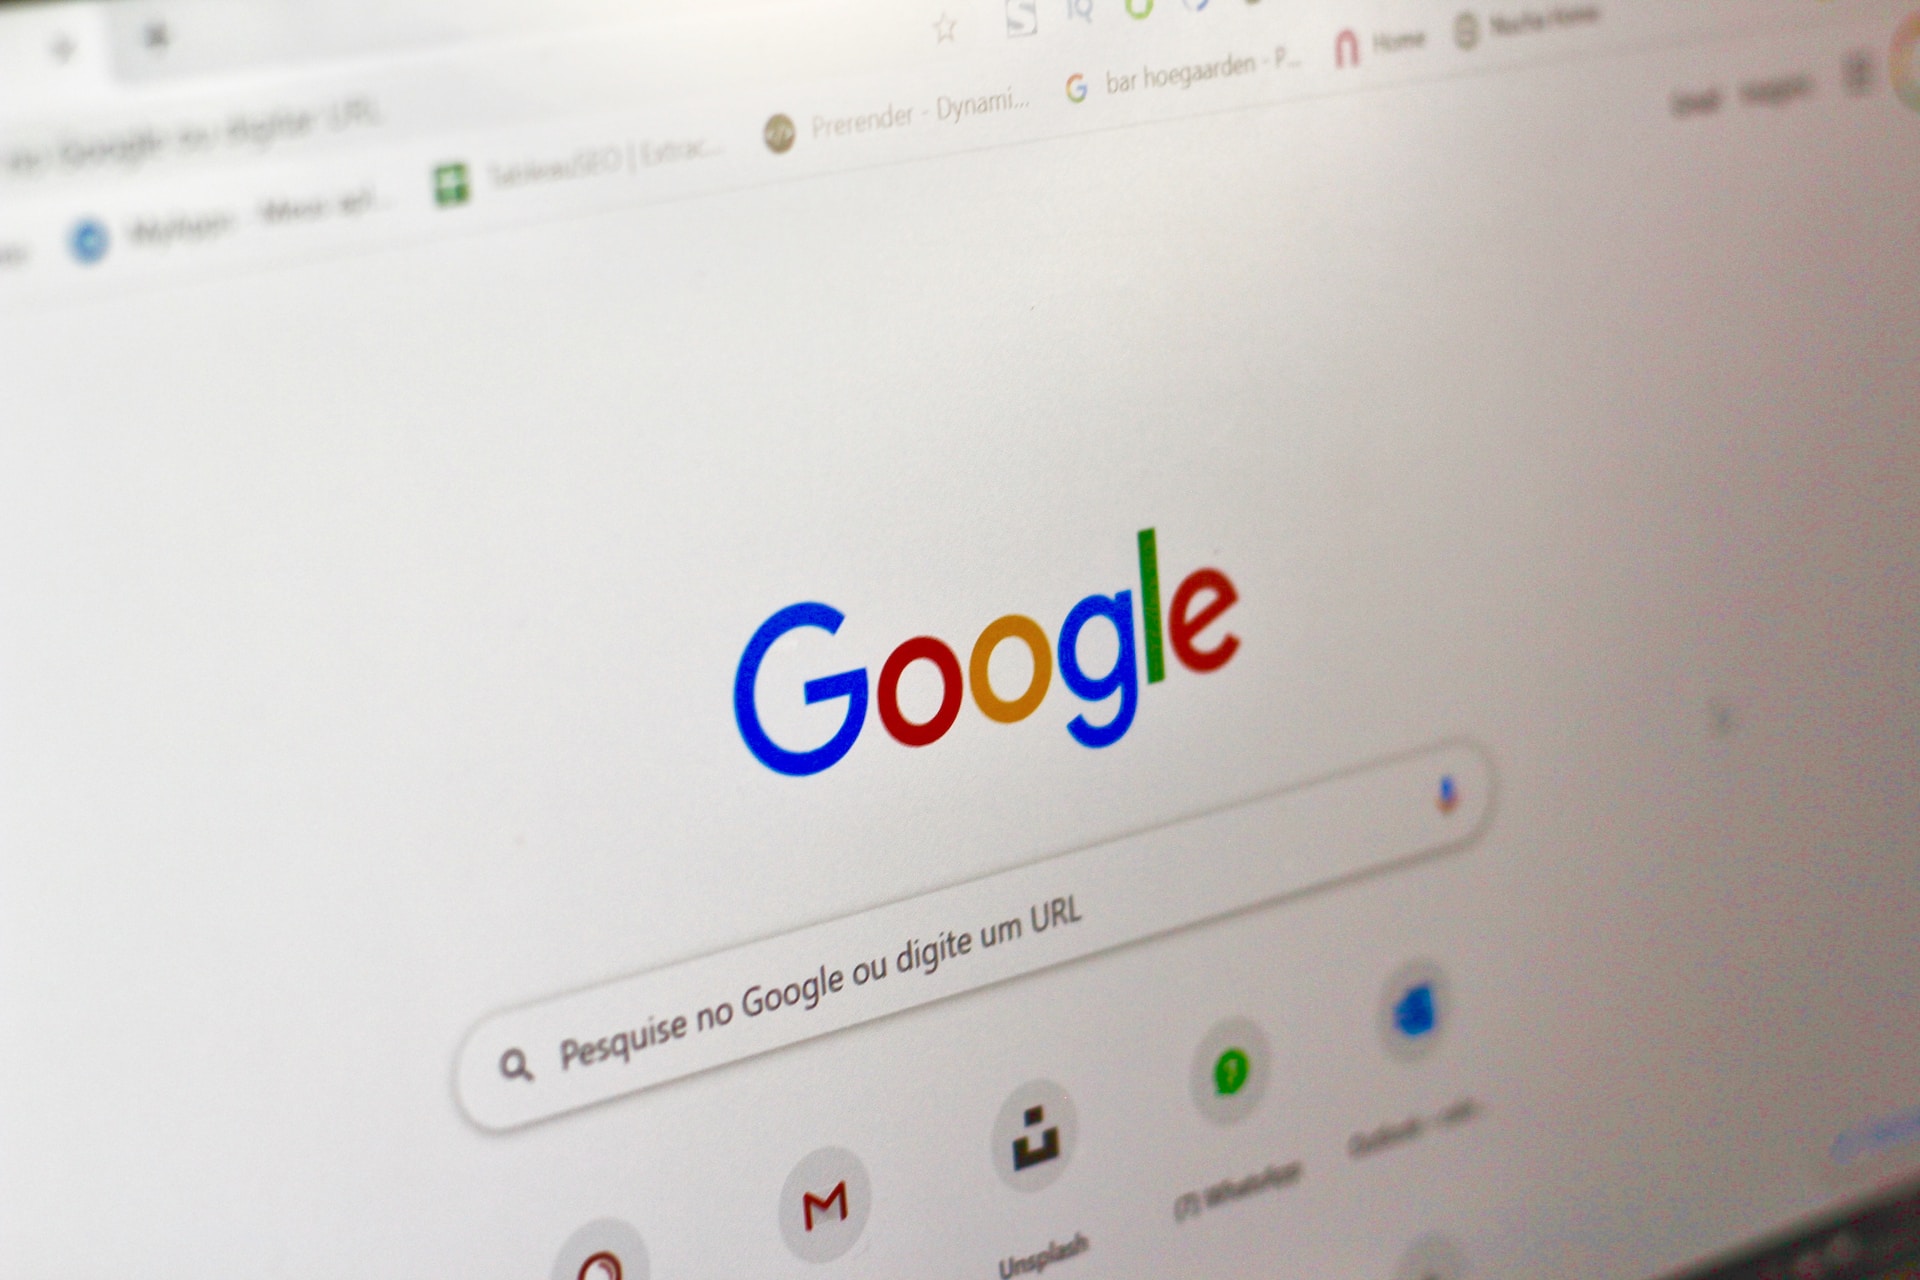 Google calls for urgent Chrome update